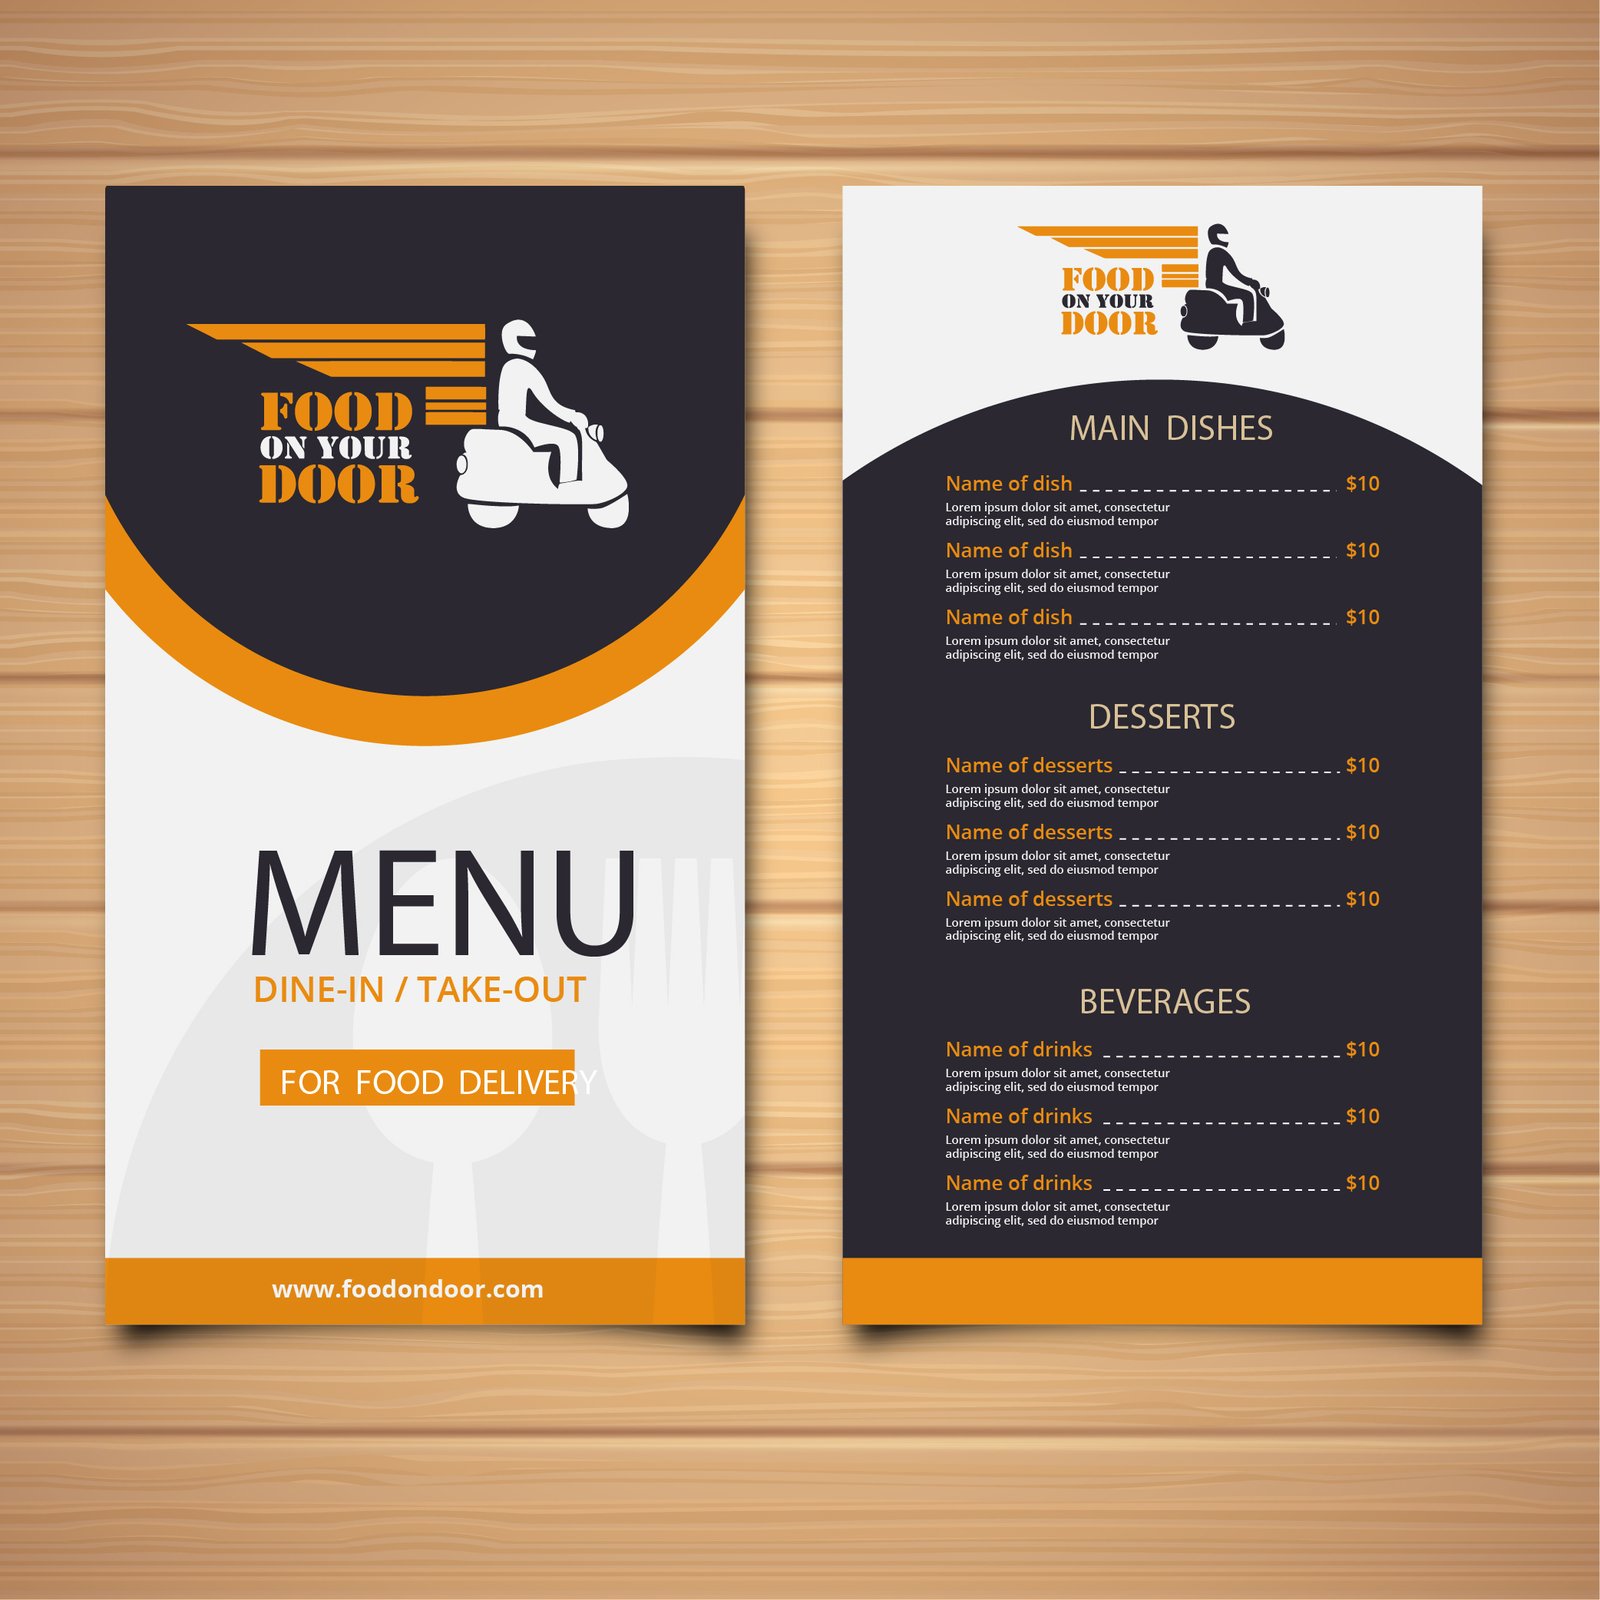 Food Delivery services provider menu card design by Badri Design